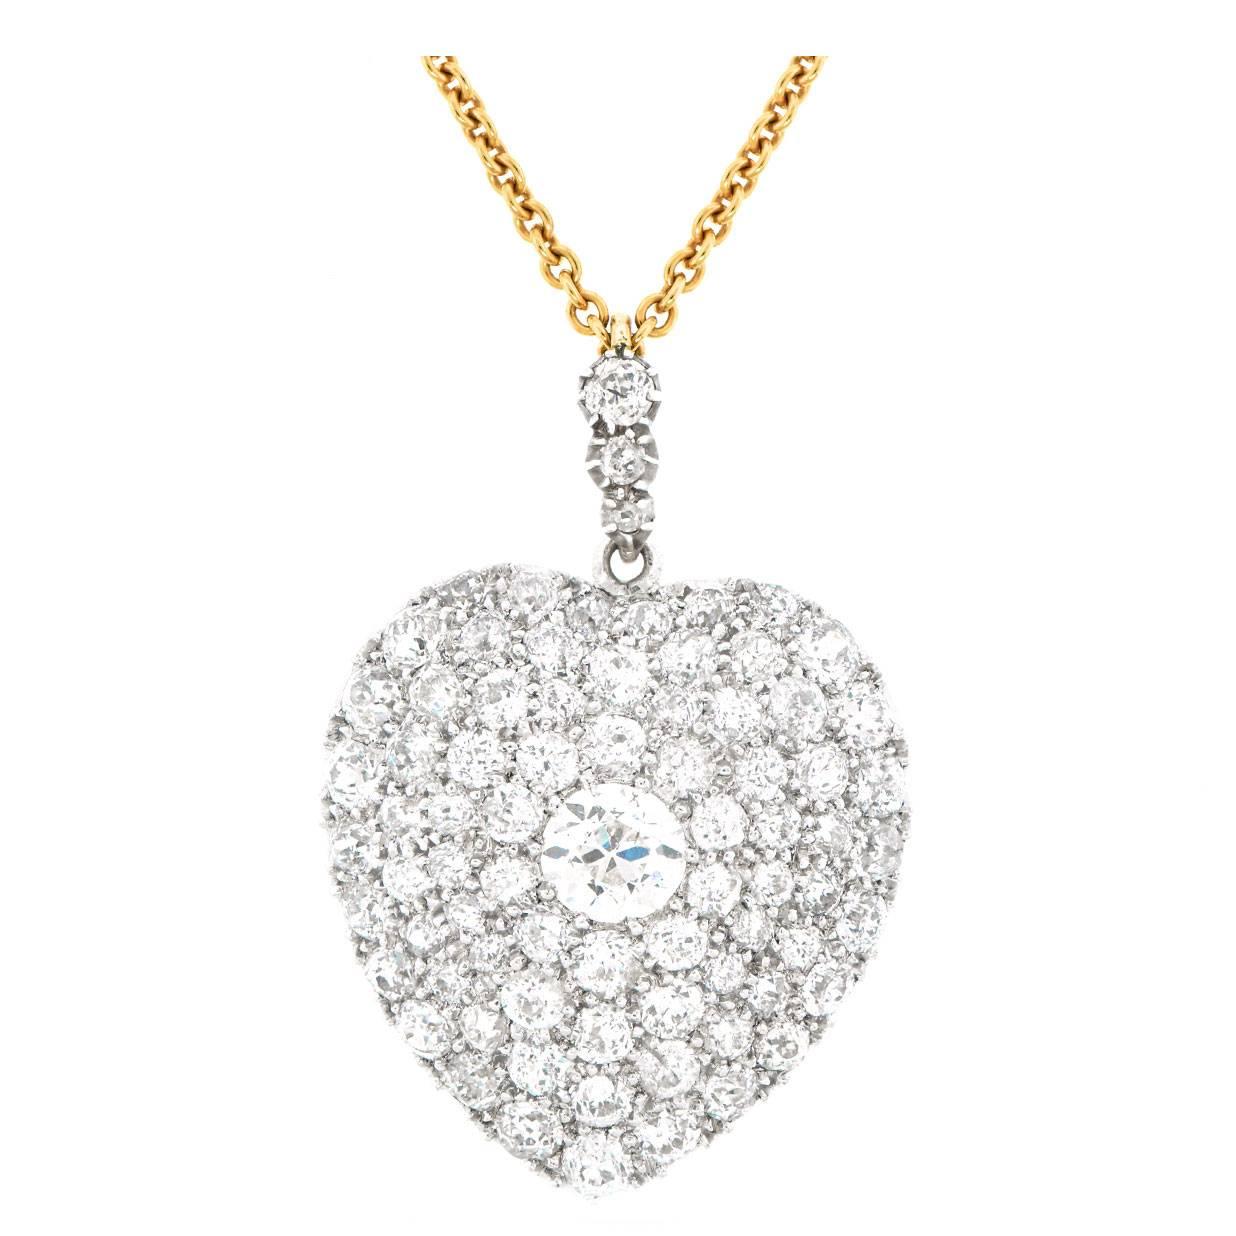 Stunning Antique Diamond Gold Heart Pendant